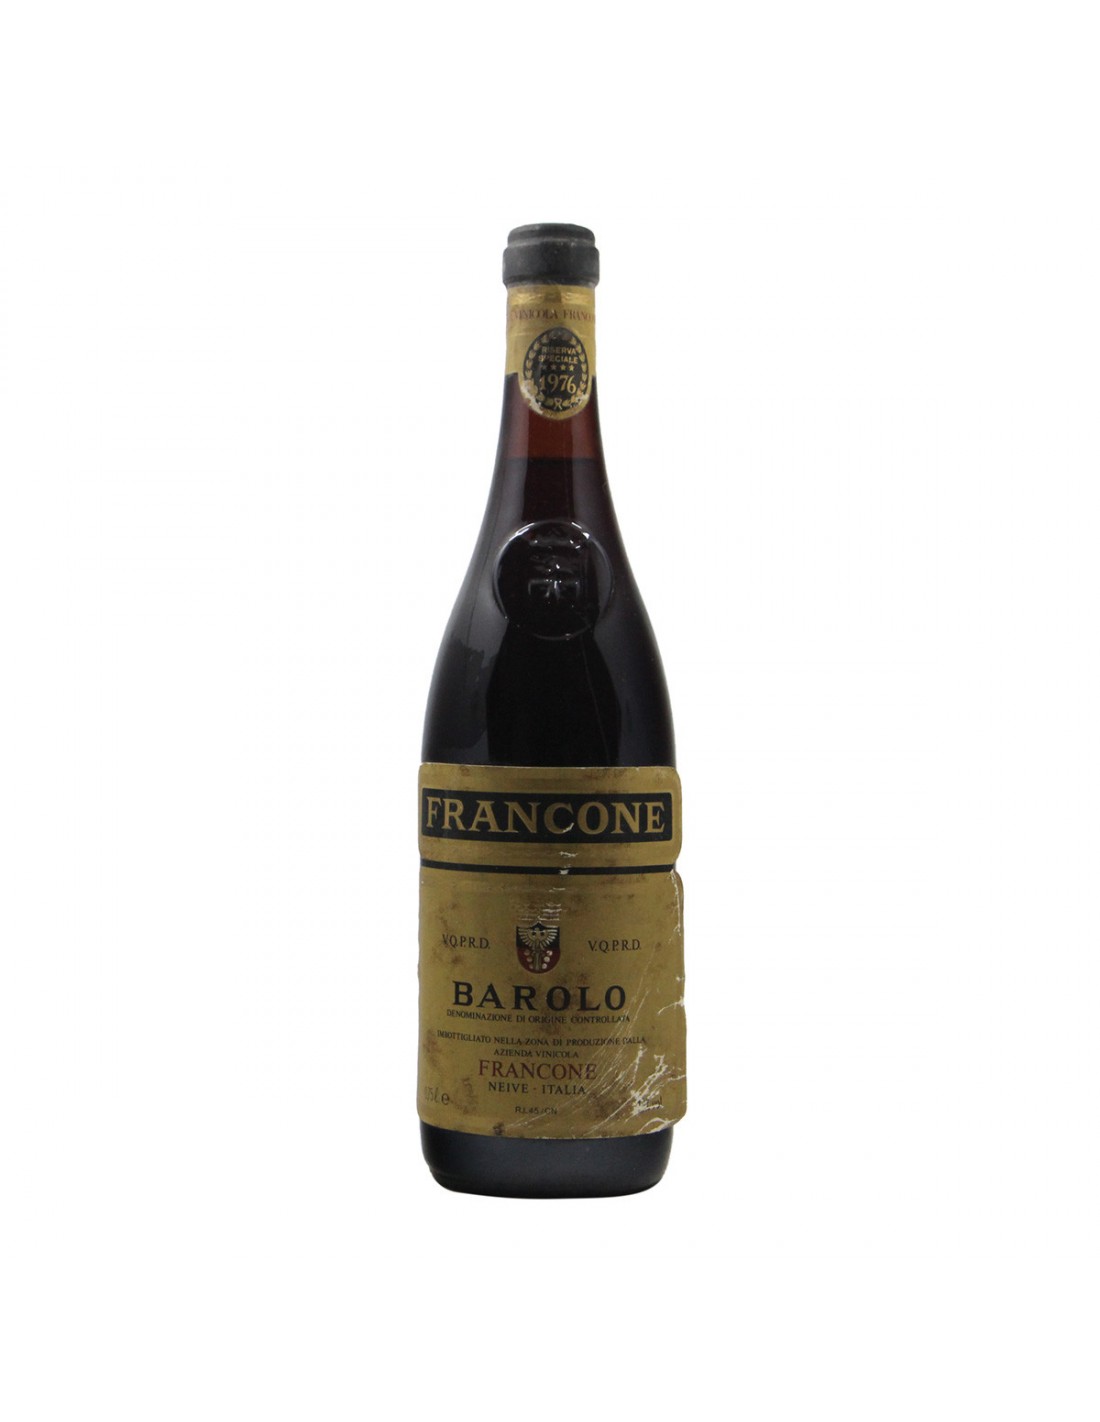 BAROLO RISERVA 1976 FRANCONE Grandi Bottiglie